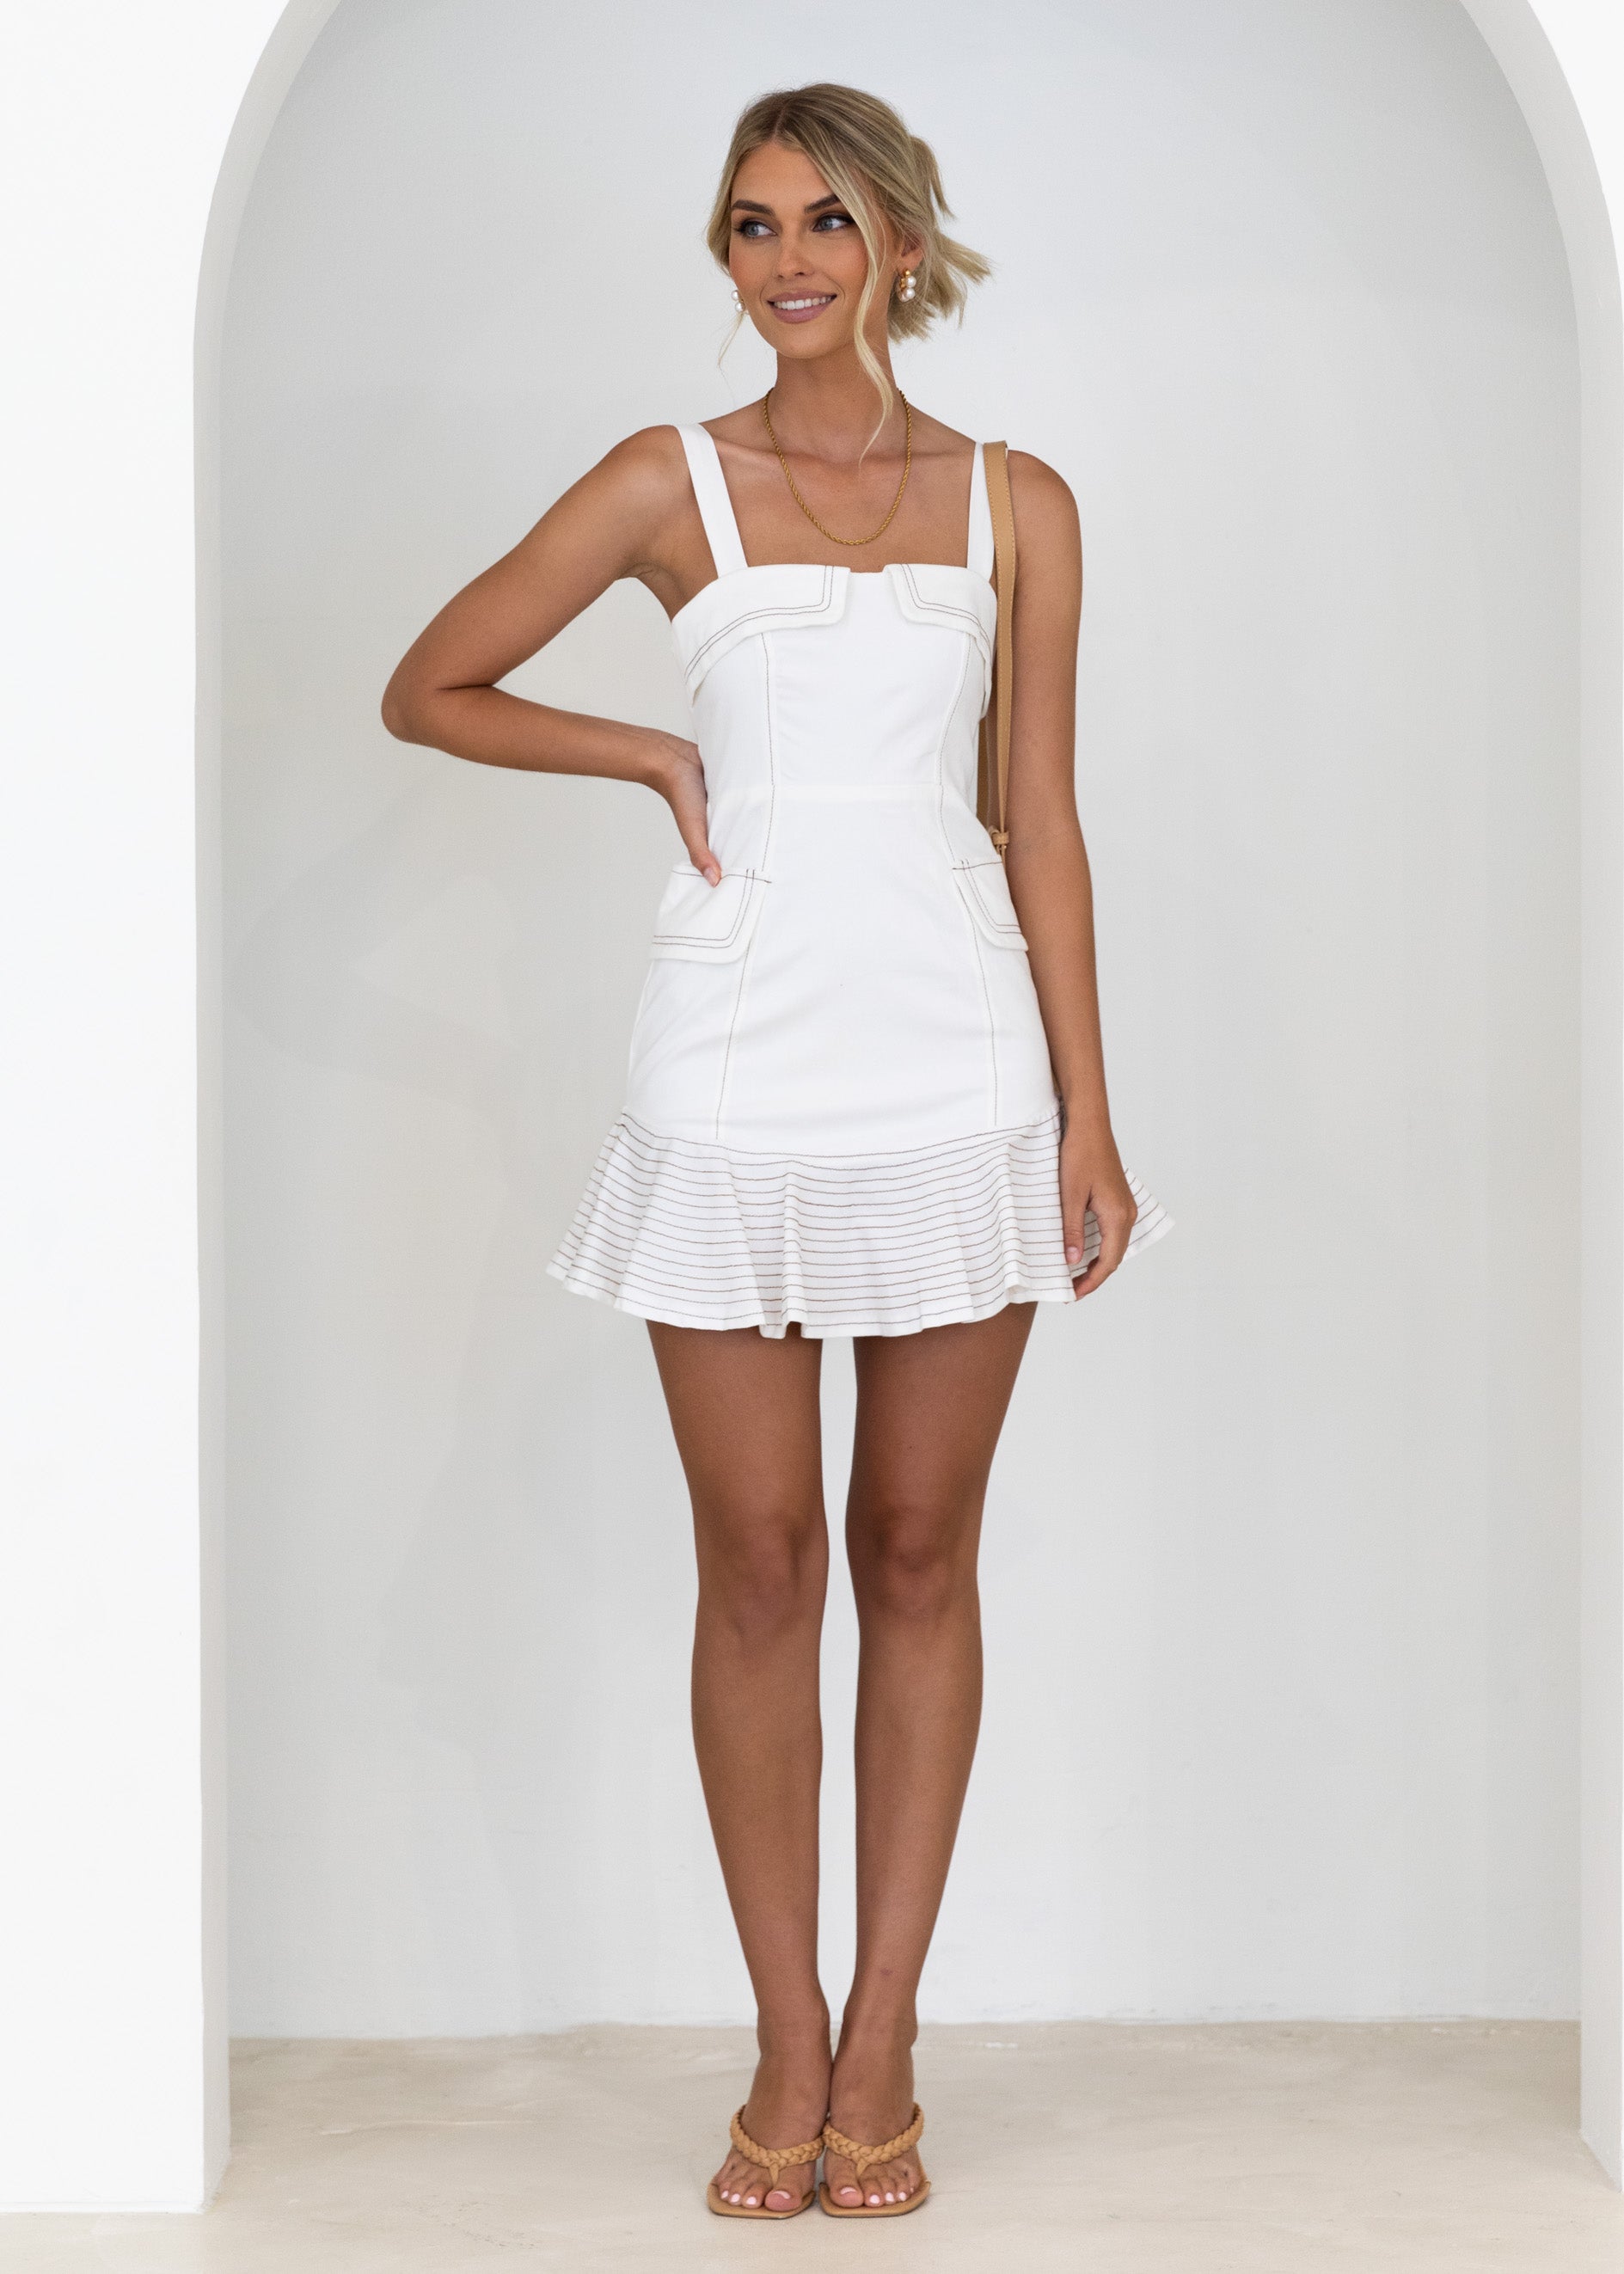 Romie Denim Dress - Off White